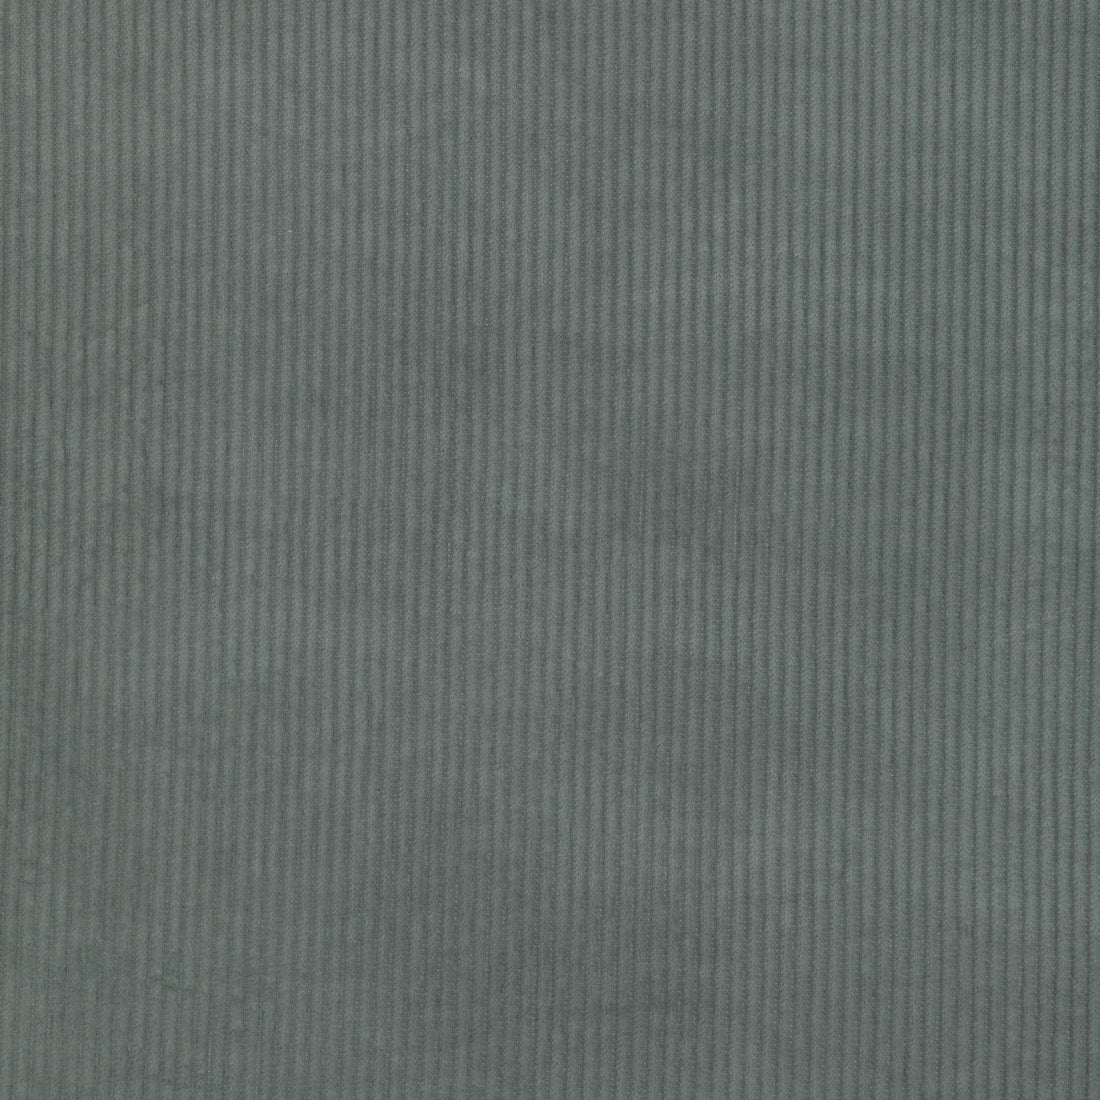 Kravet Smart fabric in 37006-1511 color - pattern 37006.1511.0 - by Kravet Smart